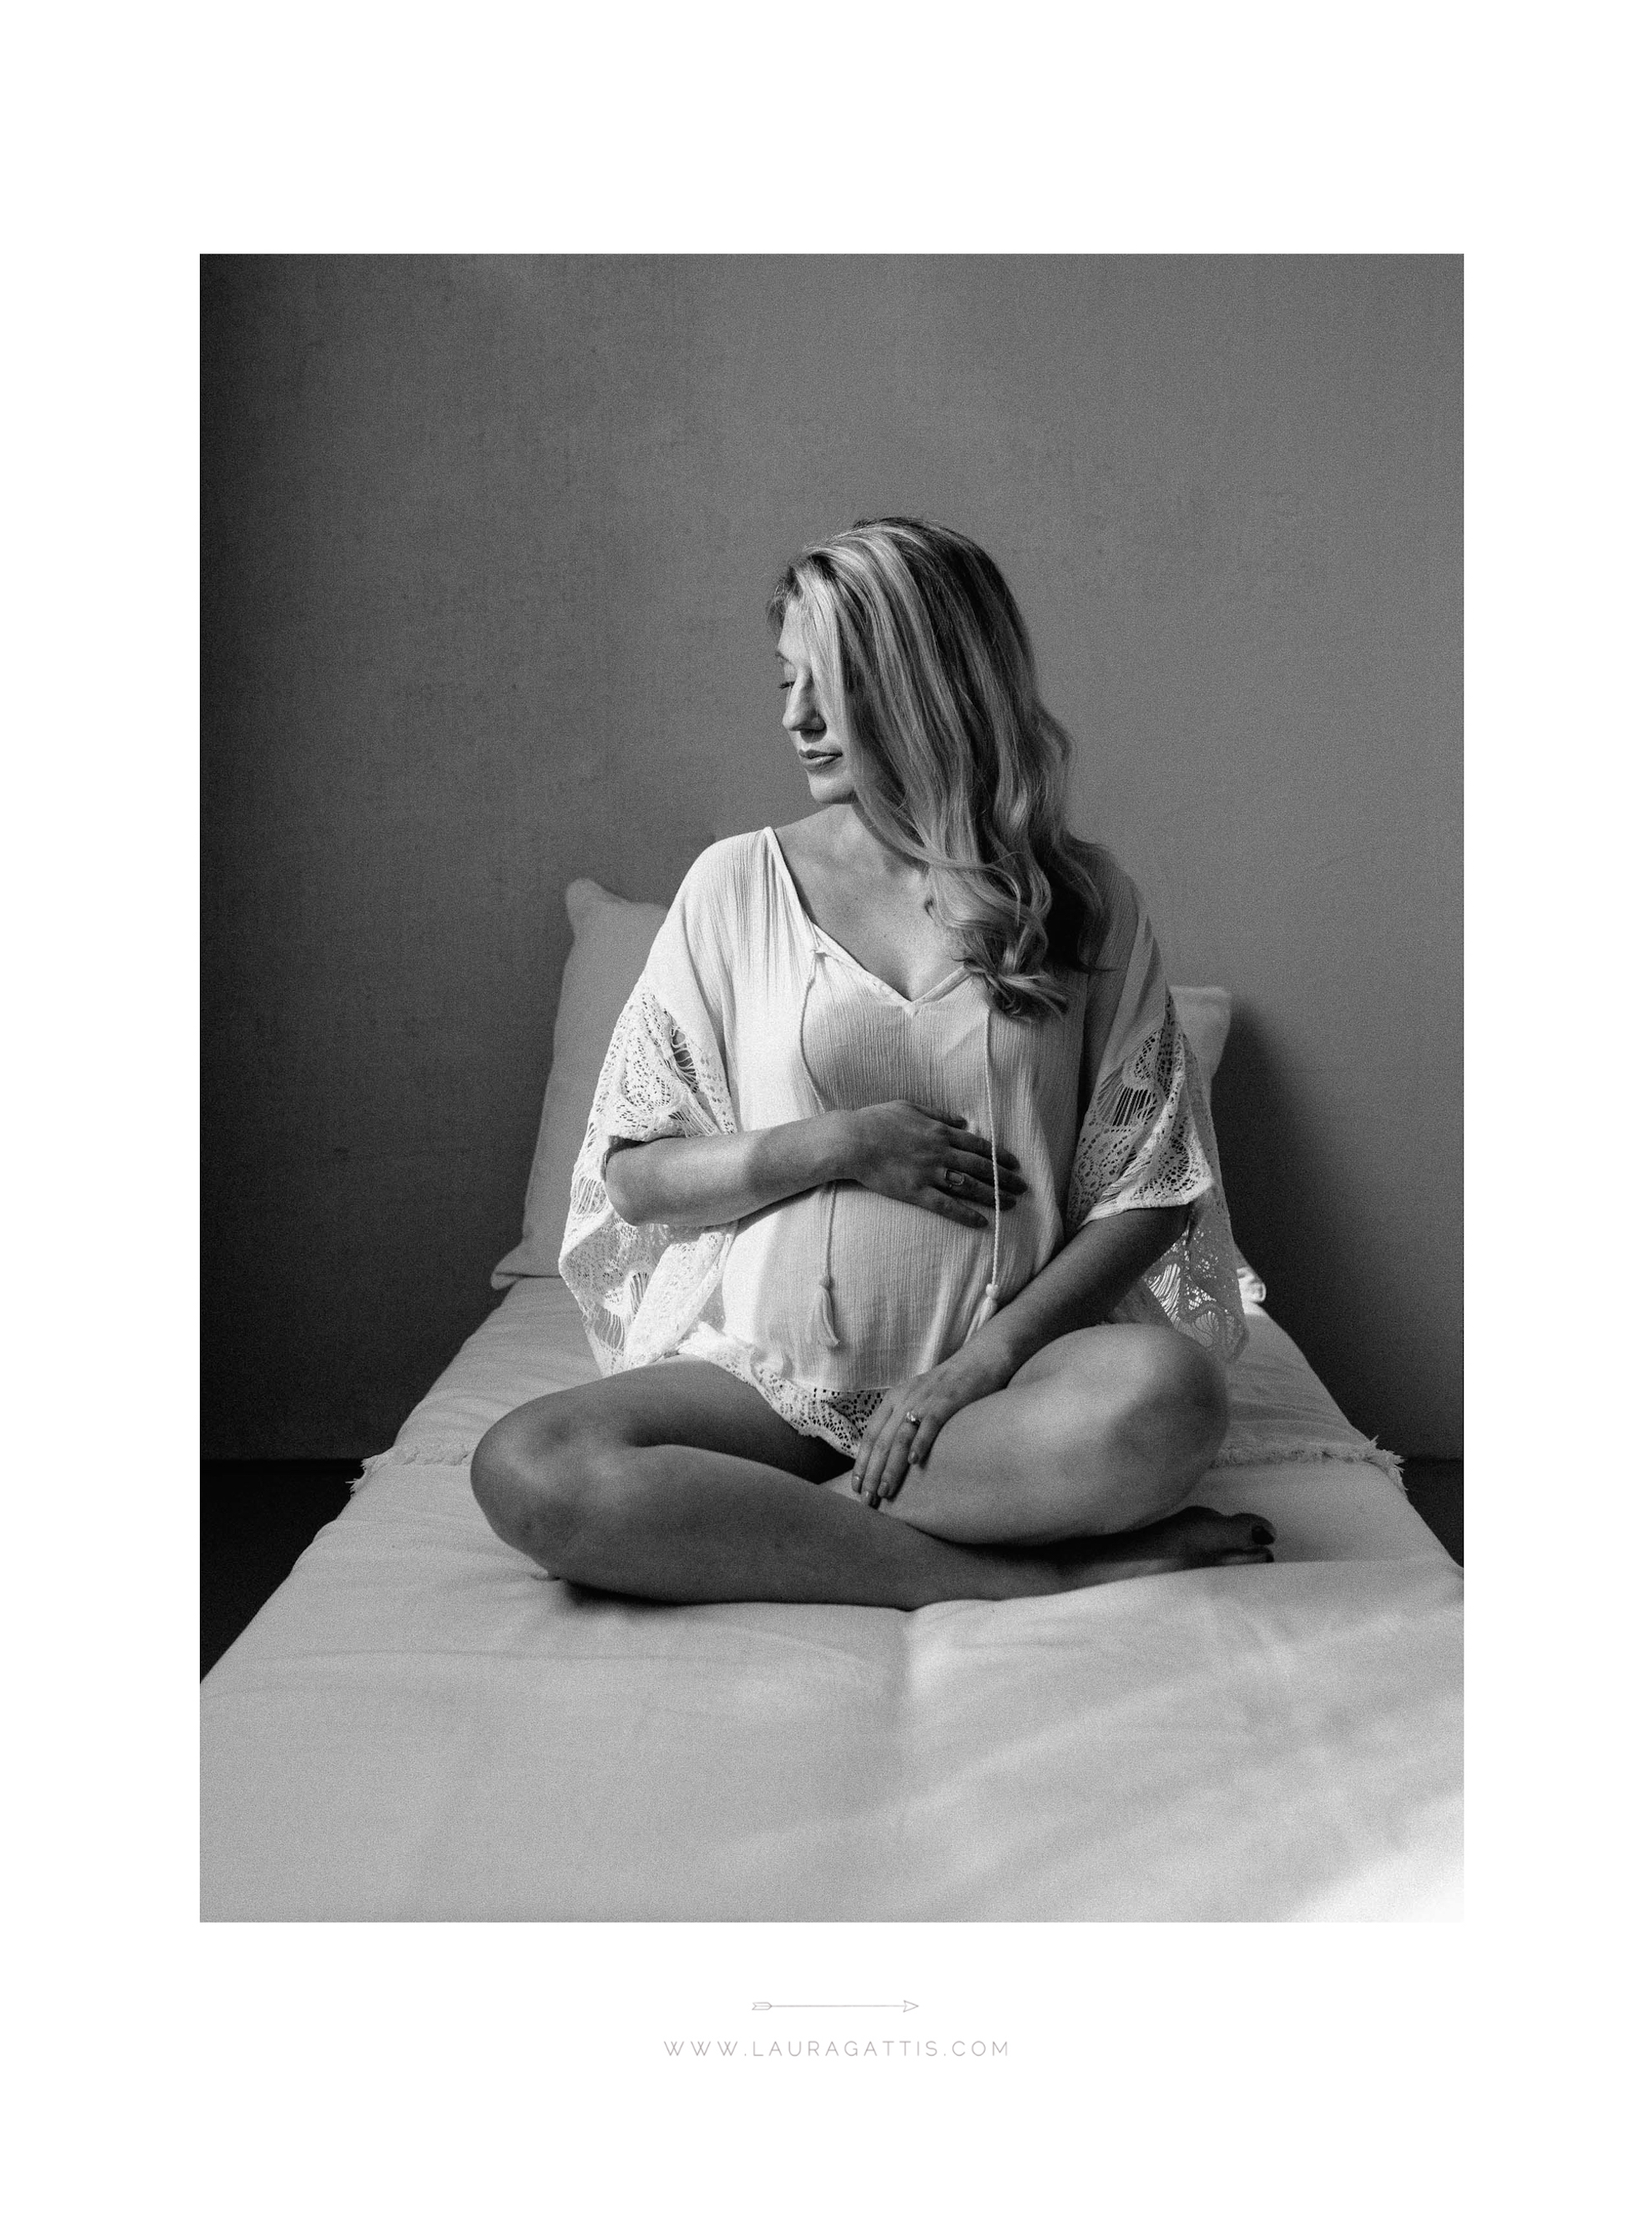 natural light studio maternity session | laura gattis photography